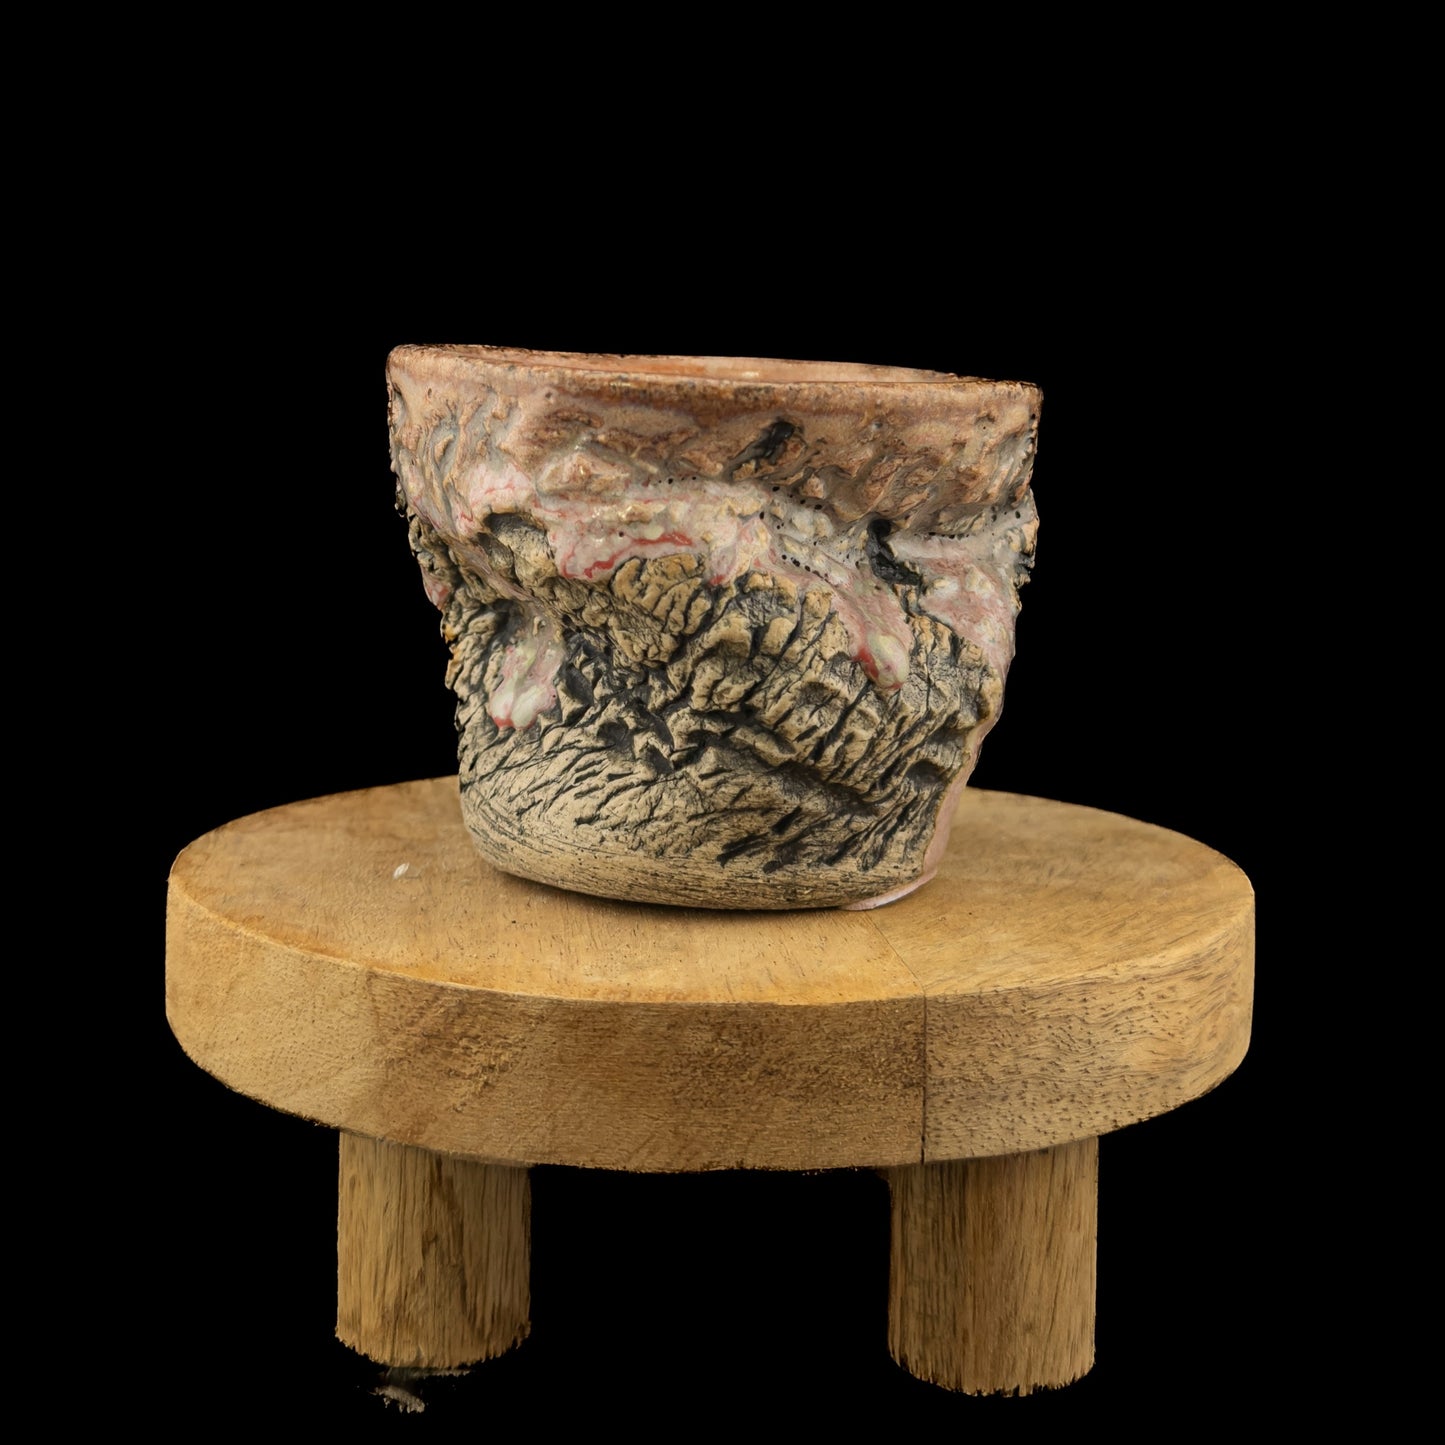 Textured Coffee Mug #025